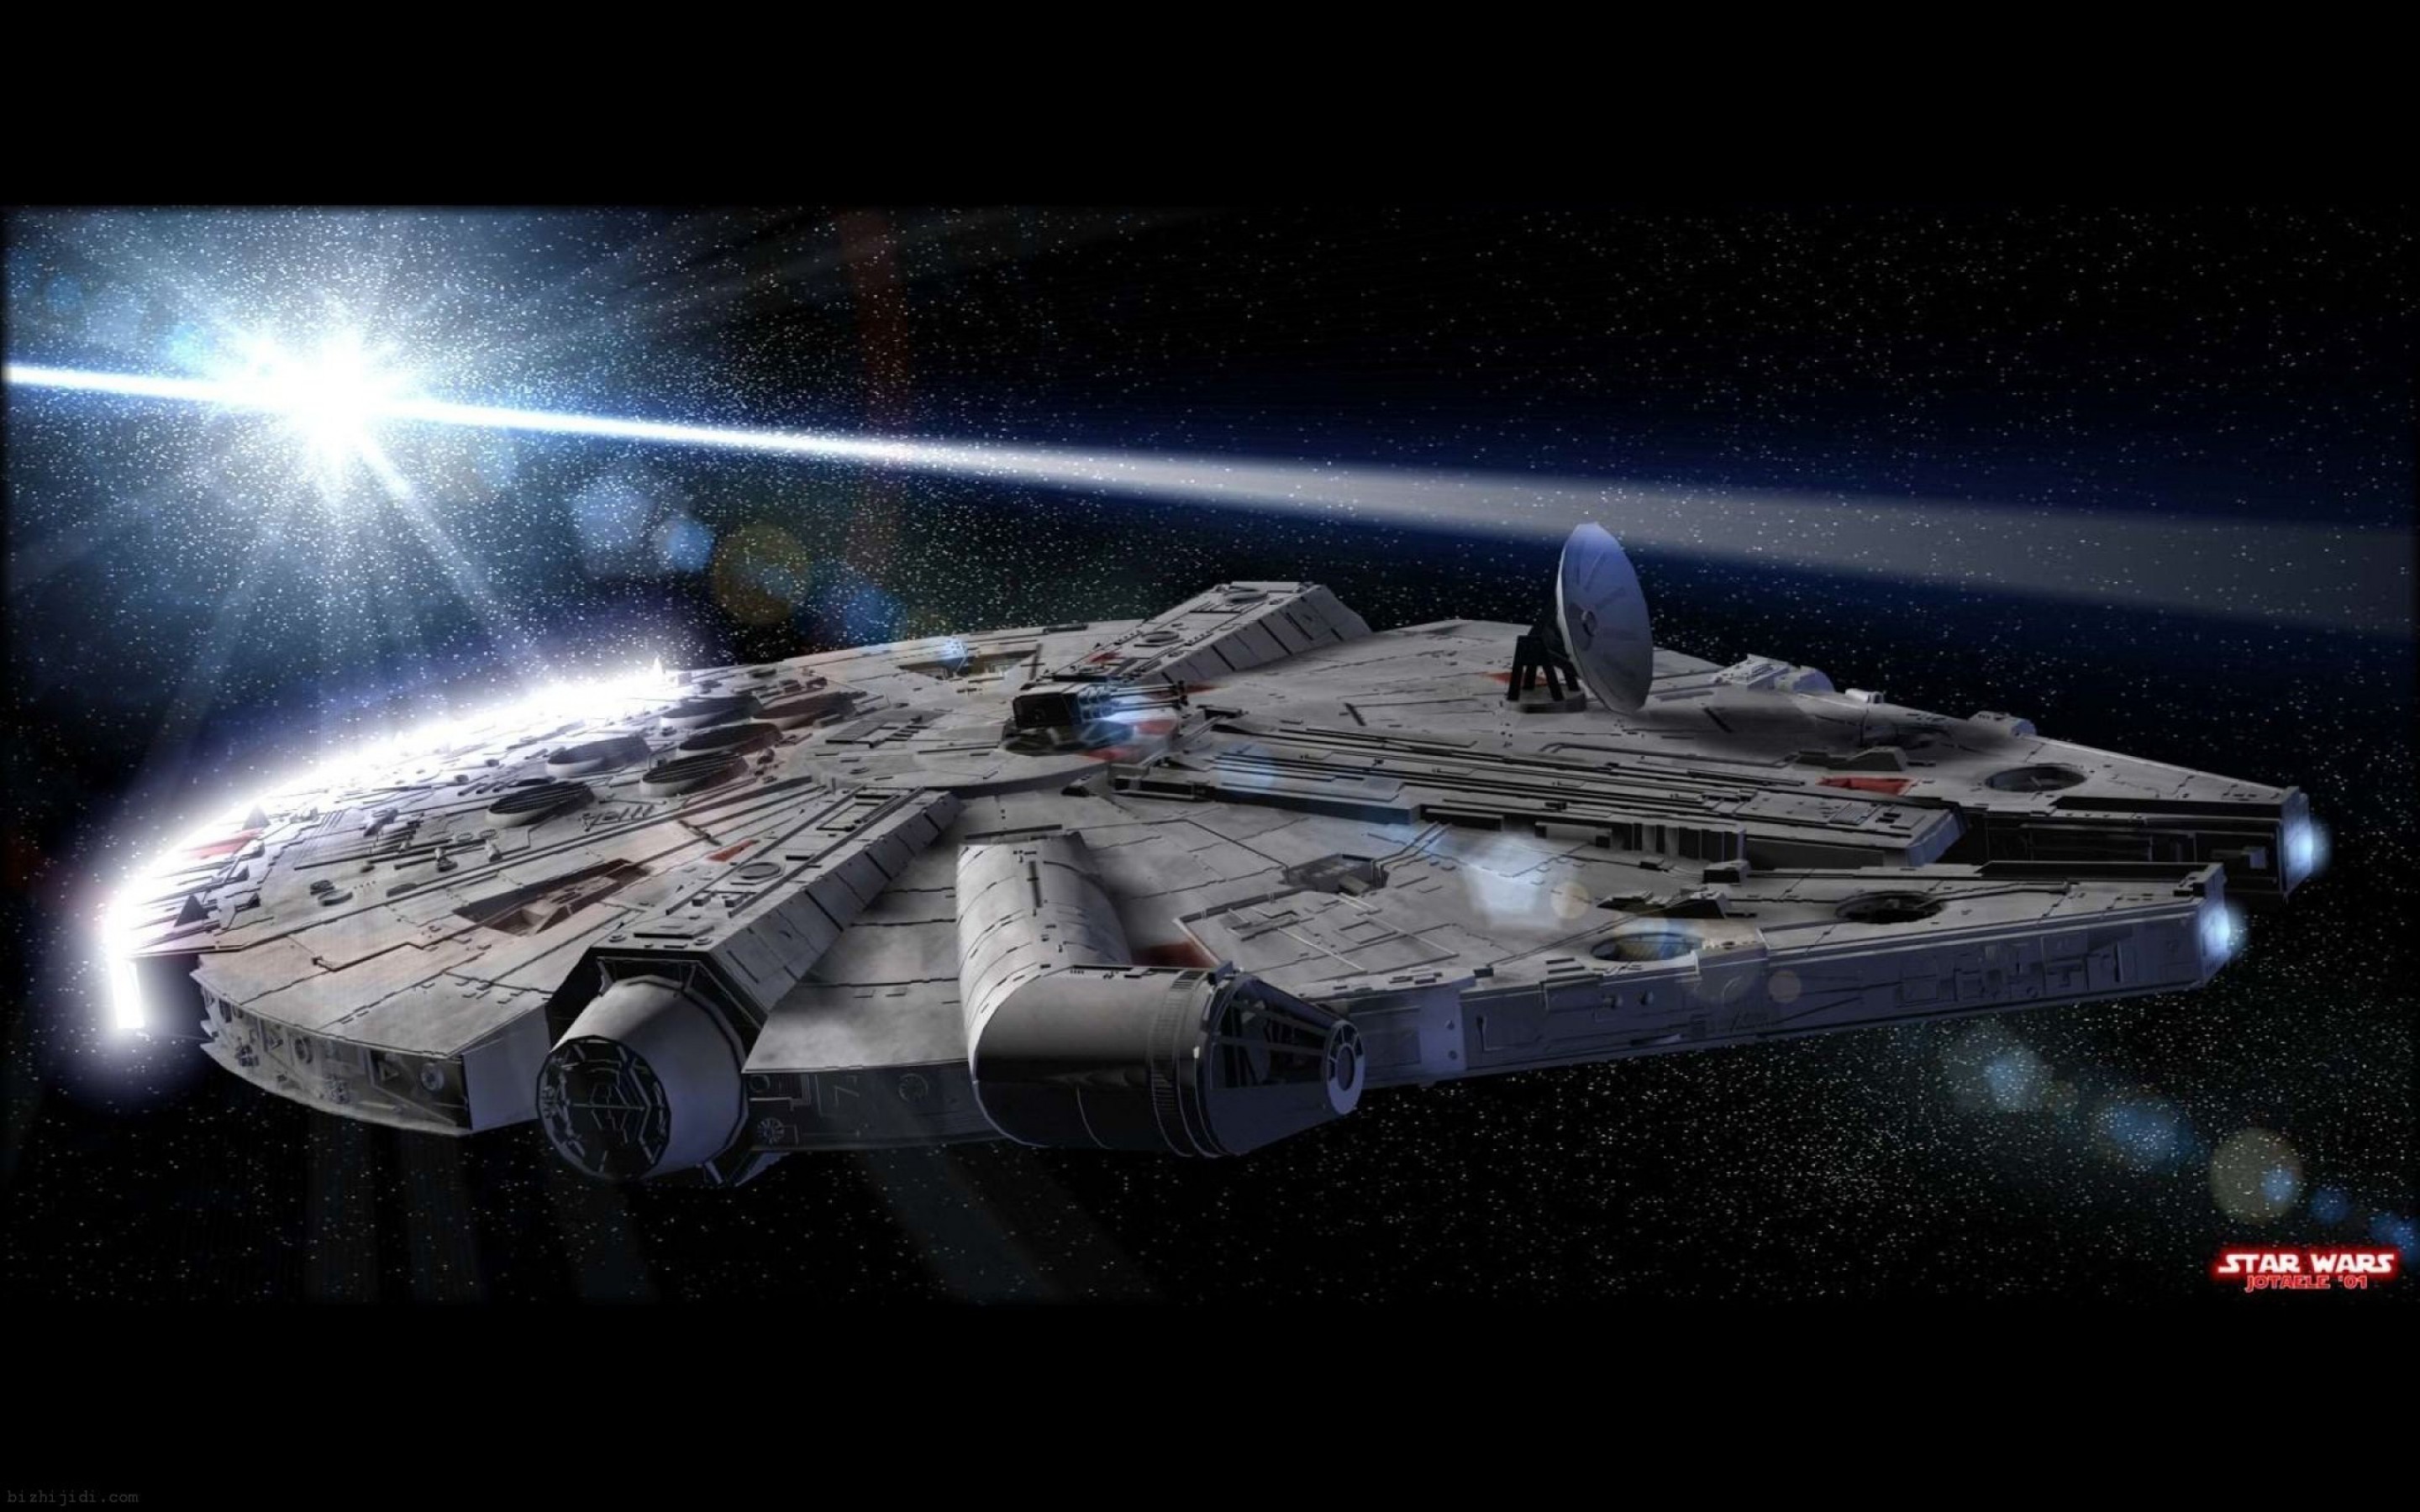 Star Wars Spaceships Millenium Falcon Wallpaper Widescreen